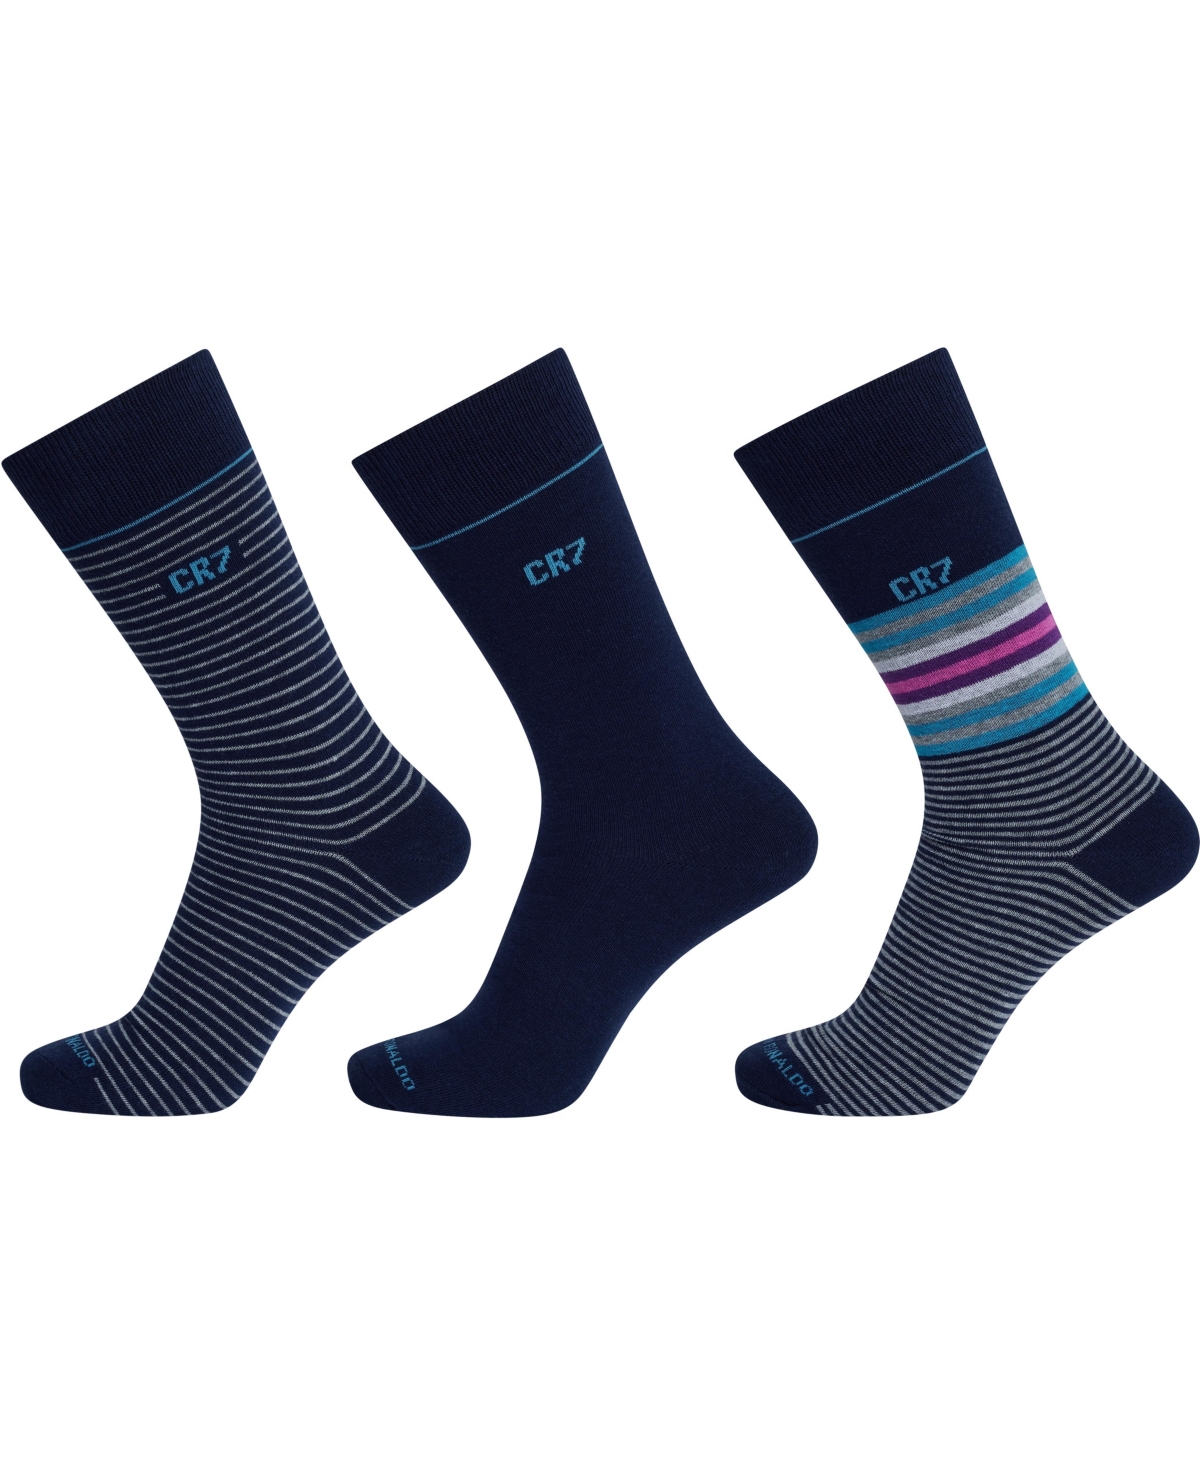 Men's Fashion Socks, Pack of 3 - Blue, Pink, Purple, Gray, White